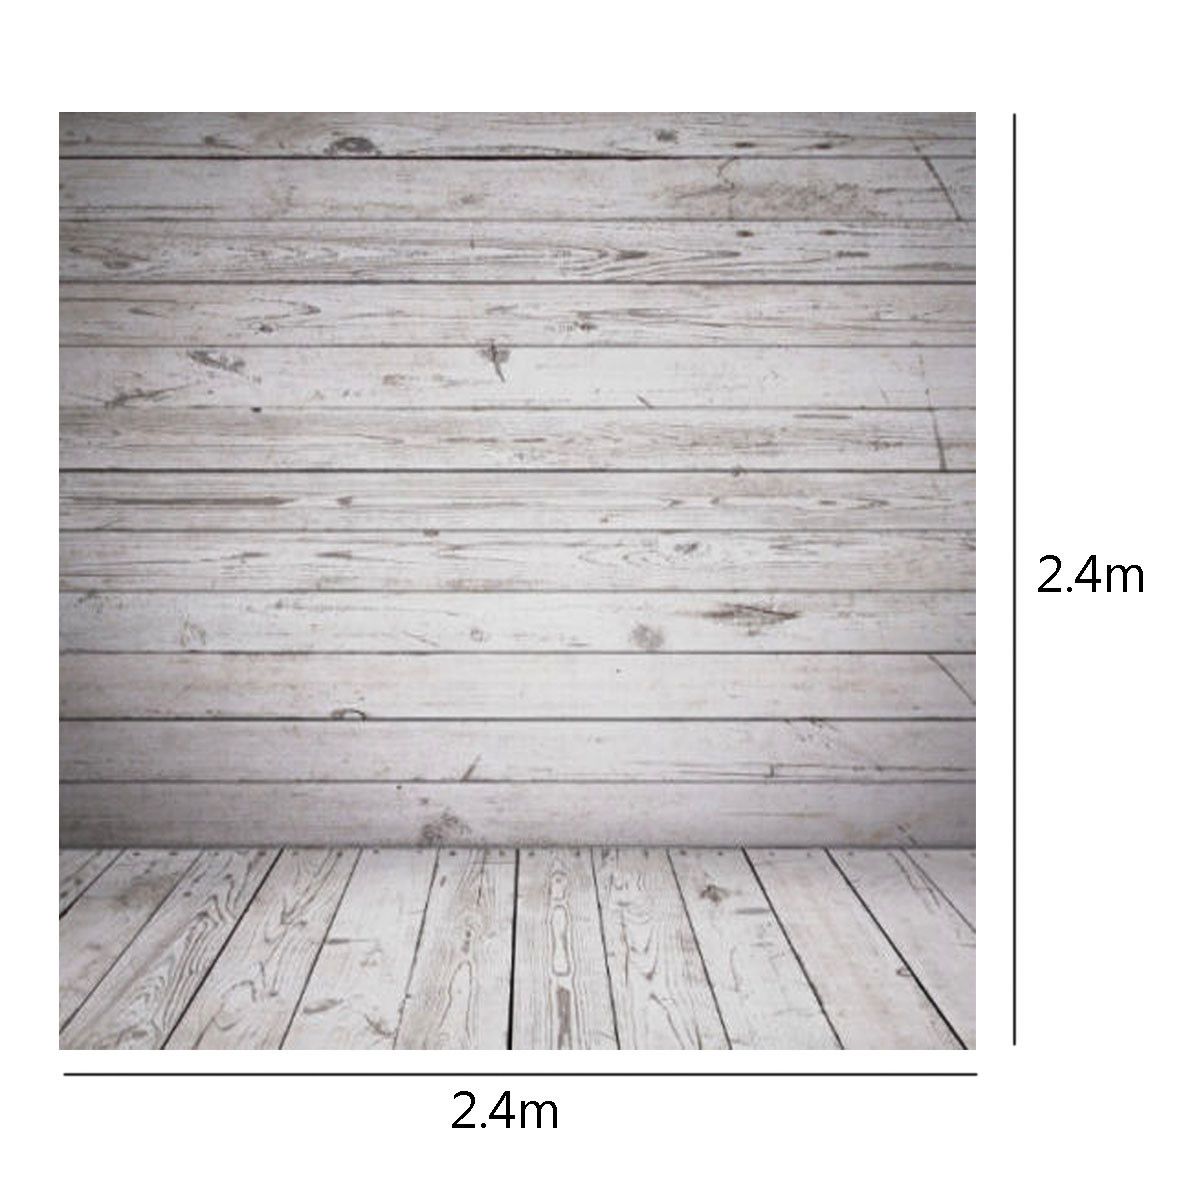 8x8ft-Vinyl-Wood-Wall-Wooden-Floor-Photography-Backdrop-Studio-Photo-Background-Decoration-1714059